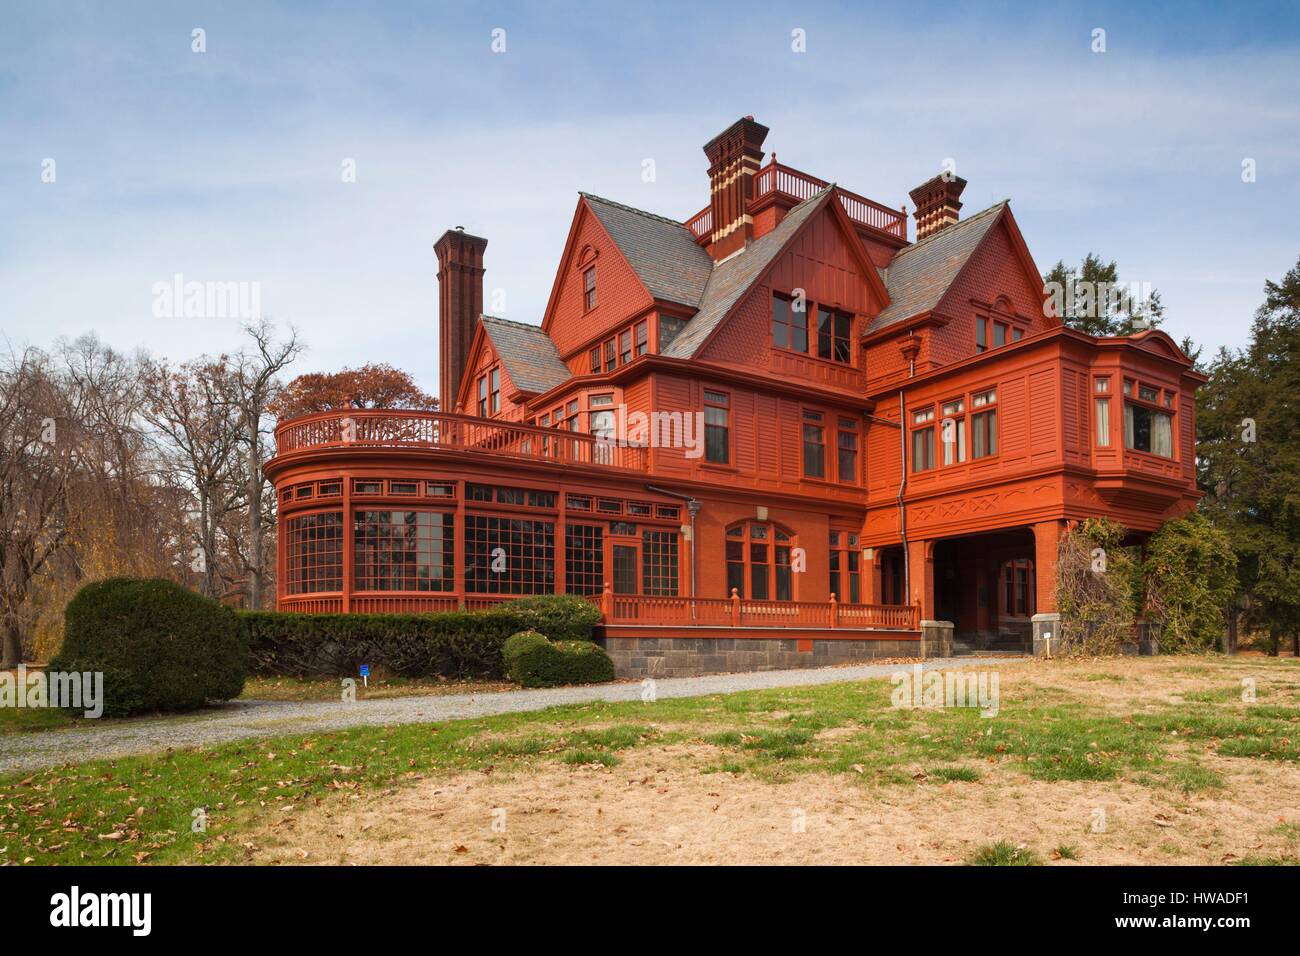 United States, New Jersey, West Orange, Thomas Edison National Historical Park, Glenmont, ancienne maison de Thomas Edison Banque D'Images